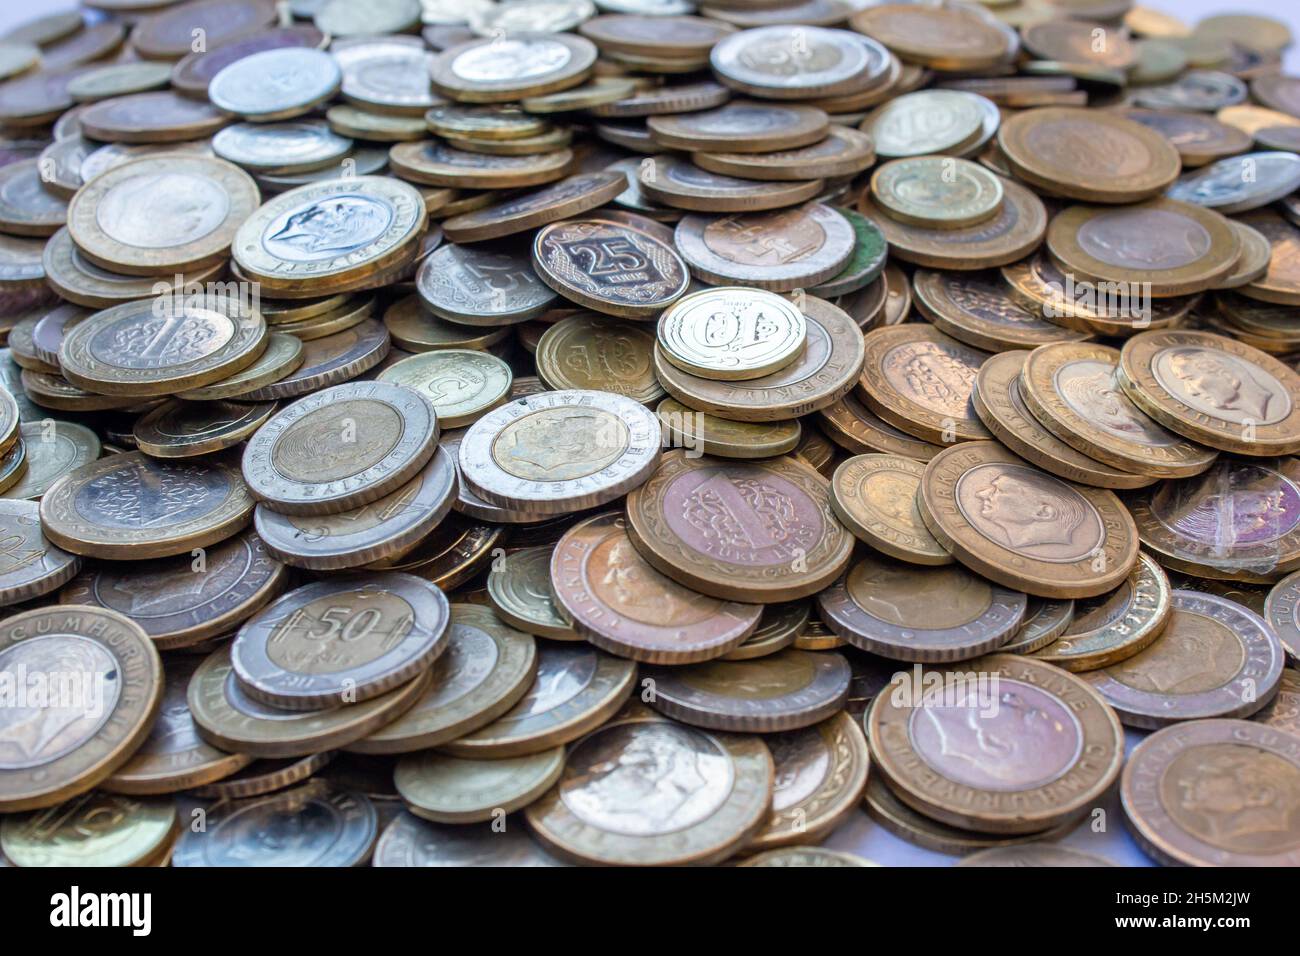 Turkish lira coins, close up photo of many Turkish lira coins. Turkey currency background photo. Stock Photo